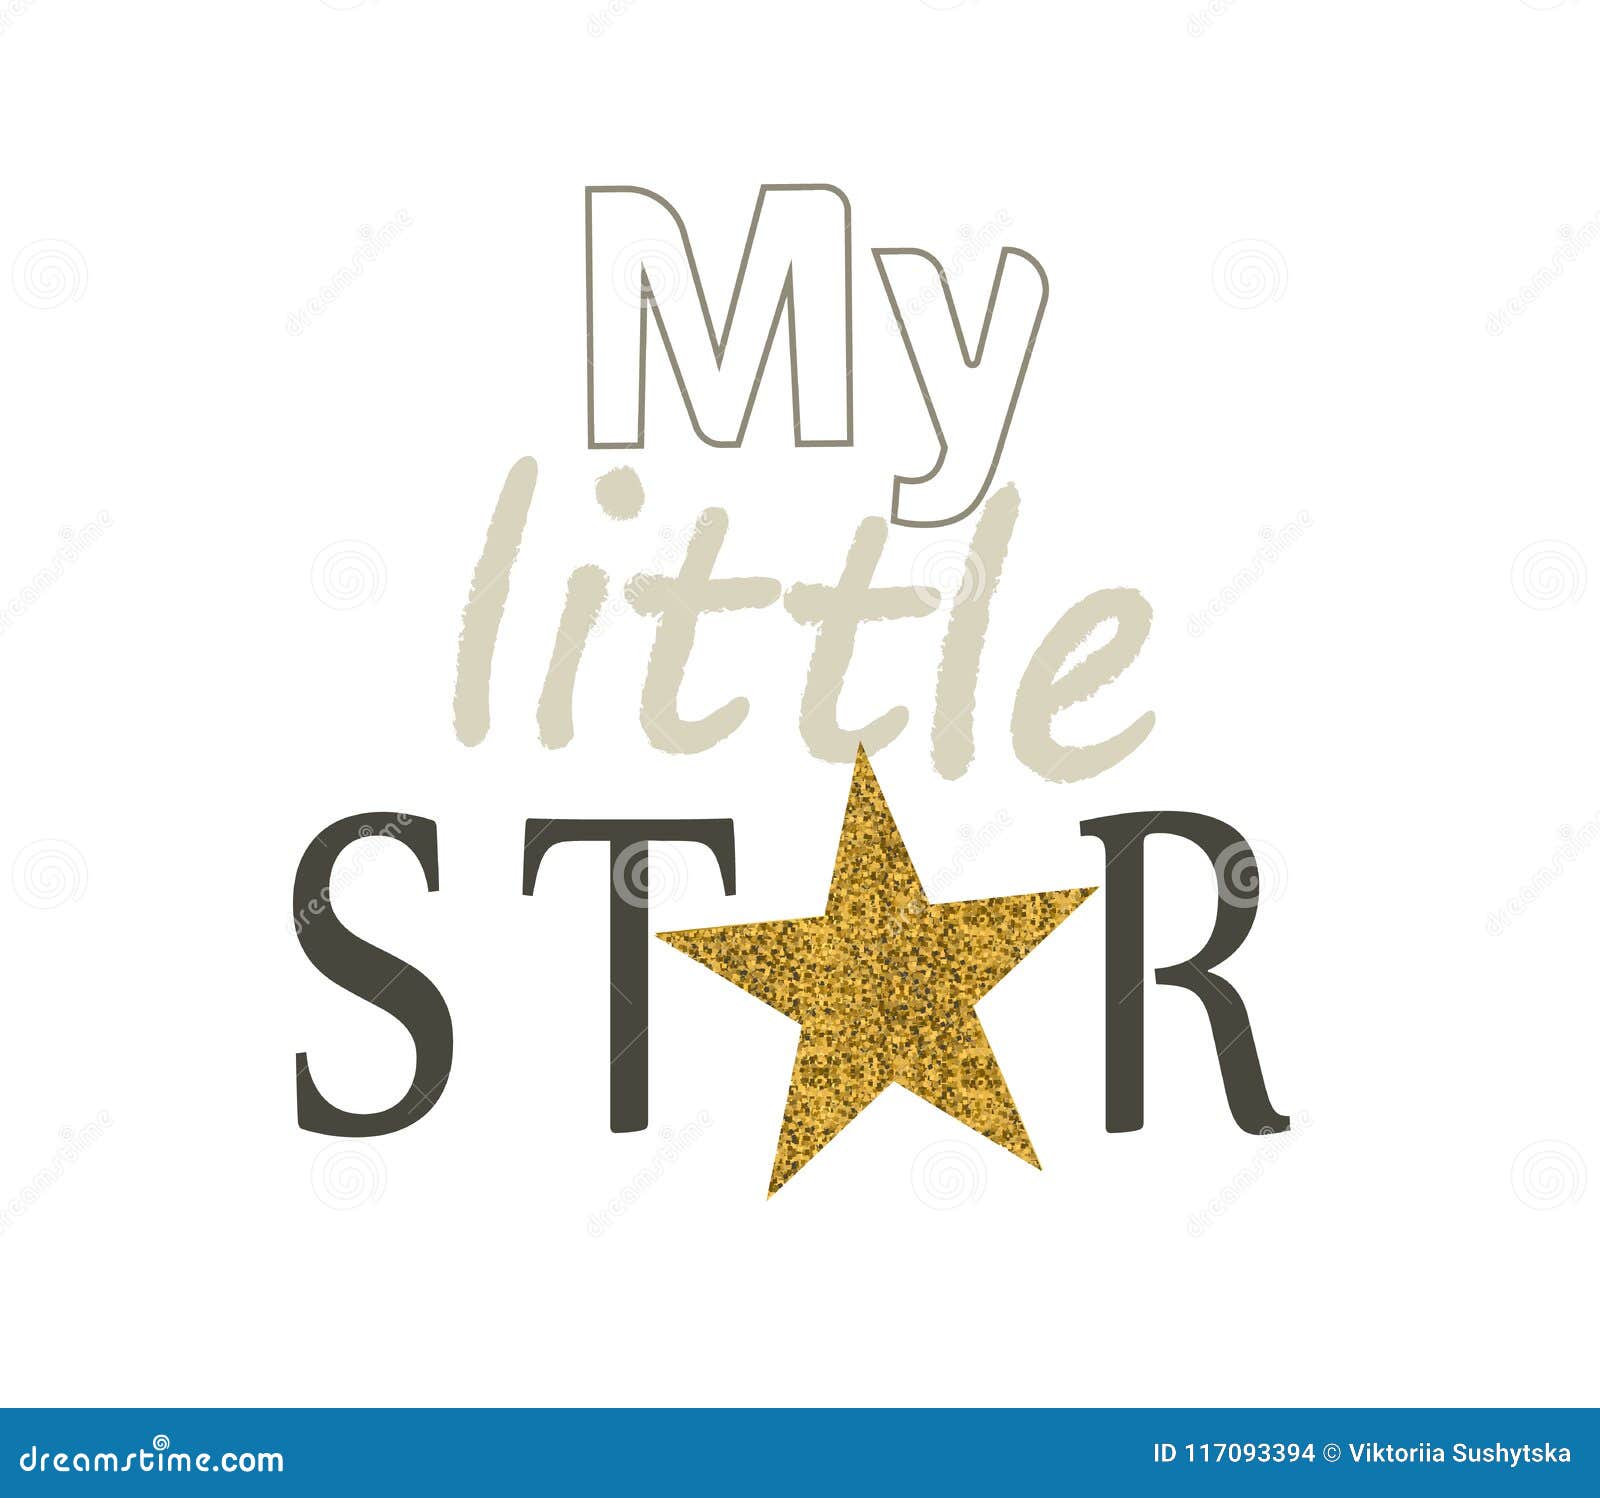 My Little Star